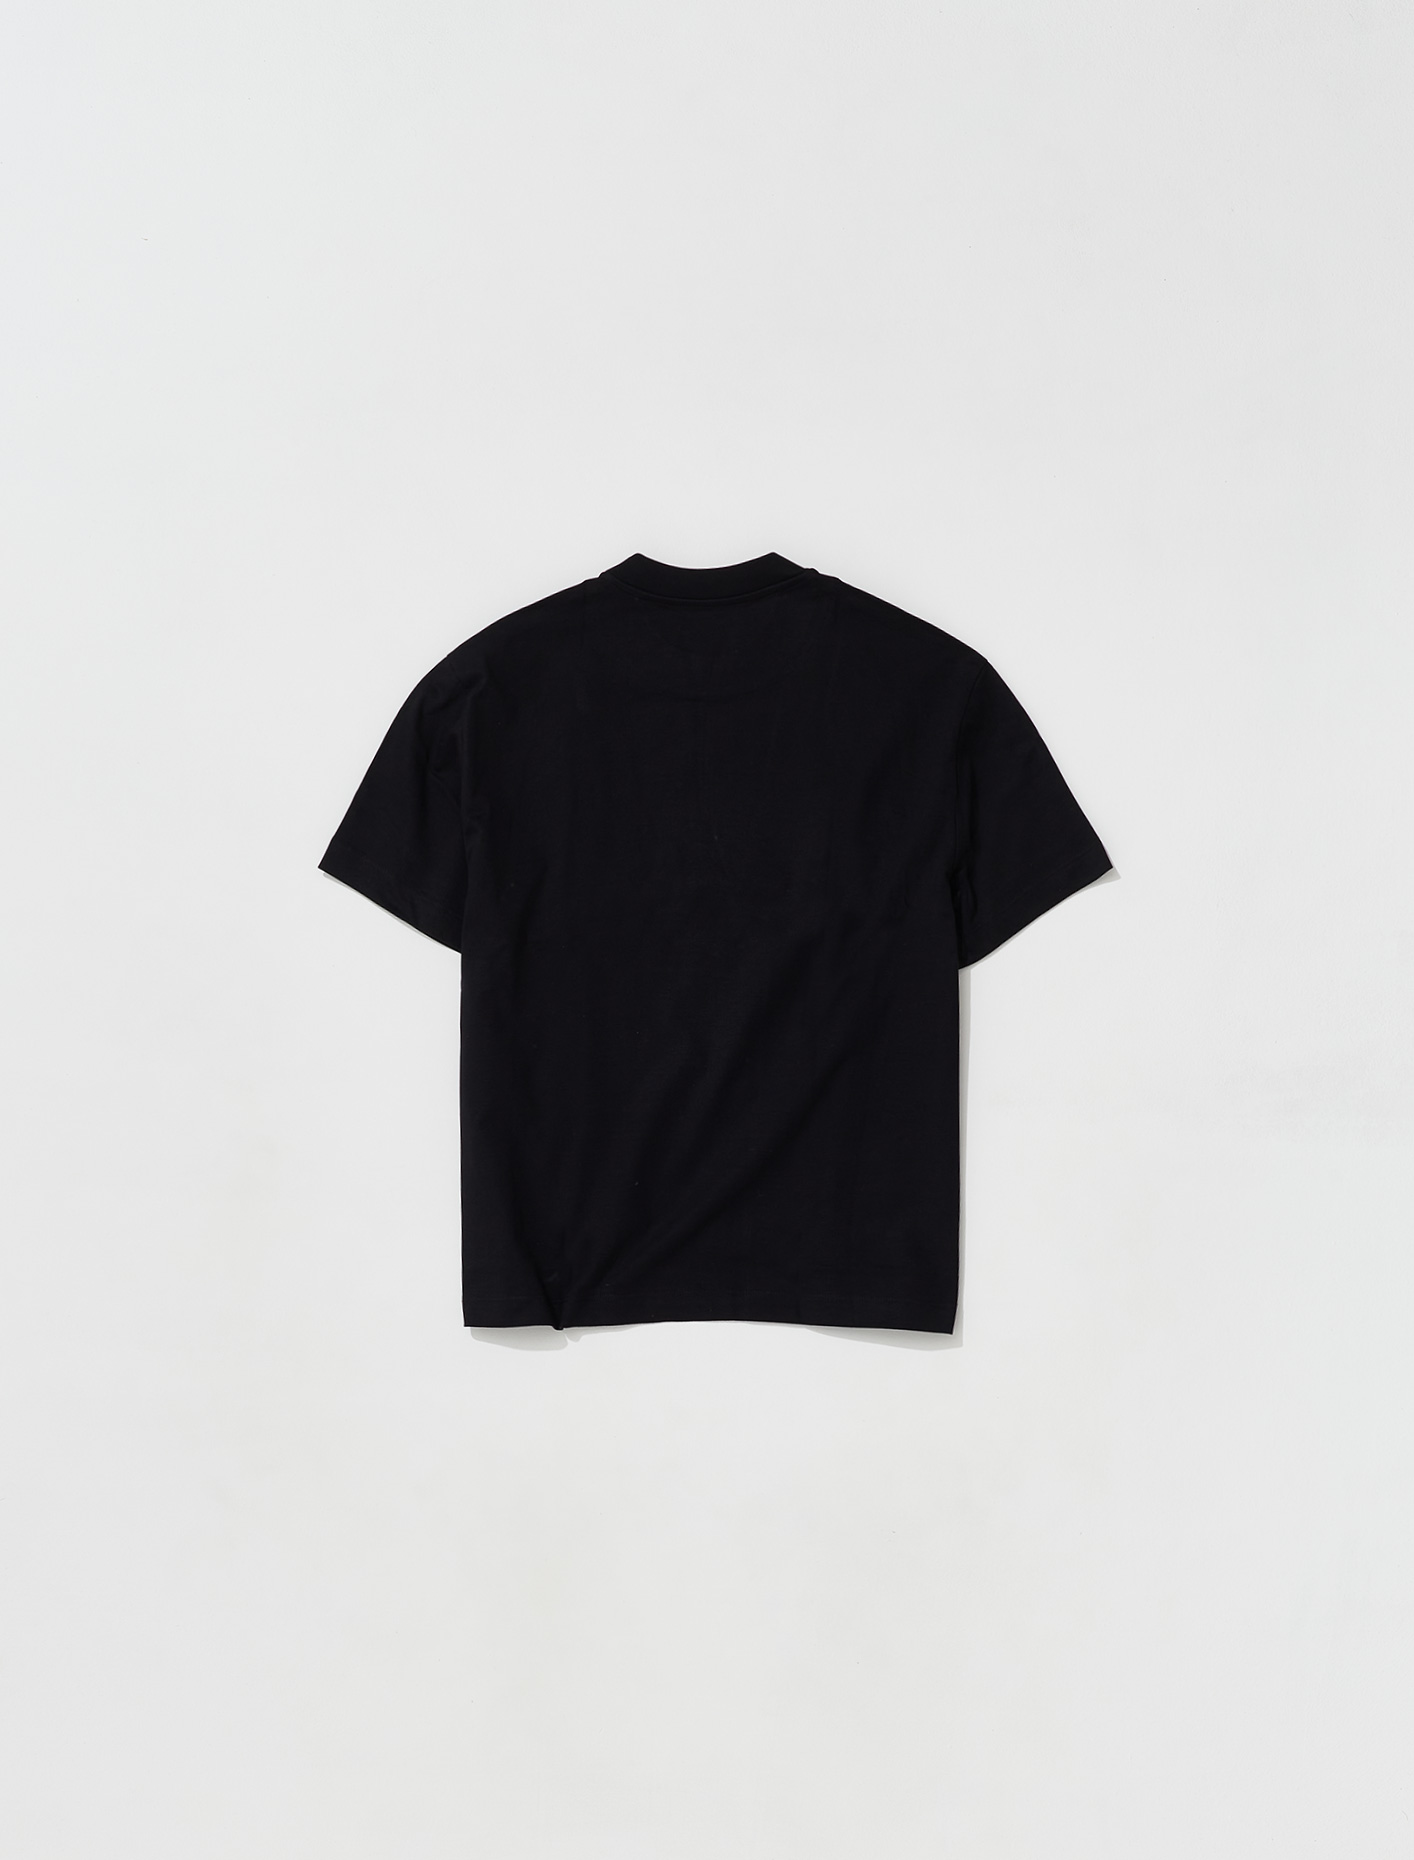 Jil Sander Women's T-Shirt 3 Pack in Black